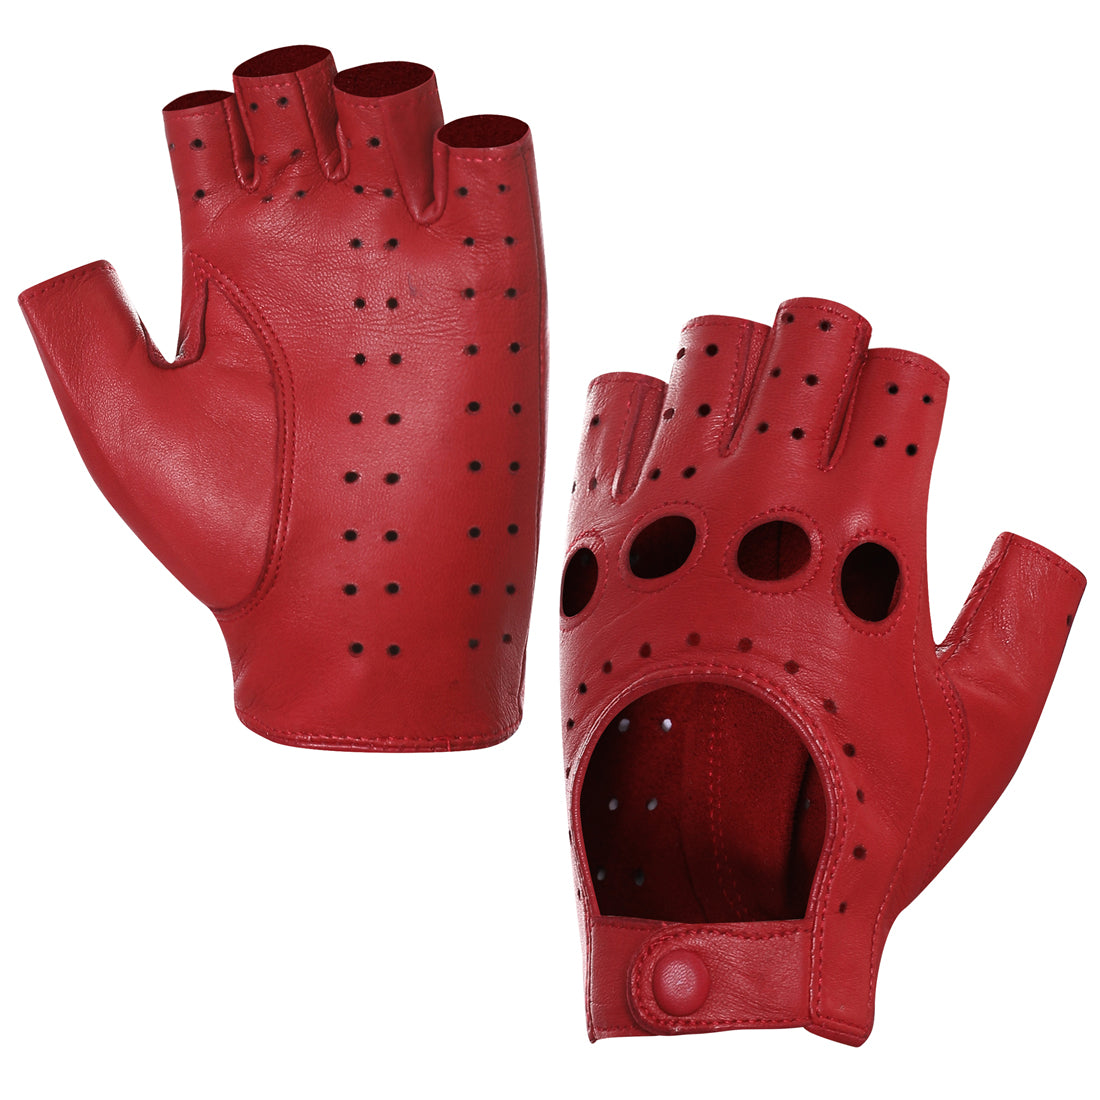 Fingerless Driving Gloves Red - Handmade in Italy 6 - Xs